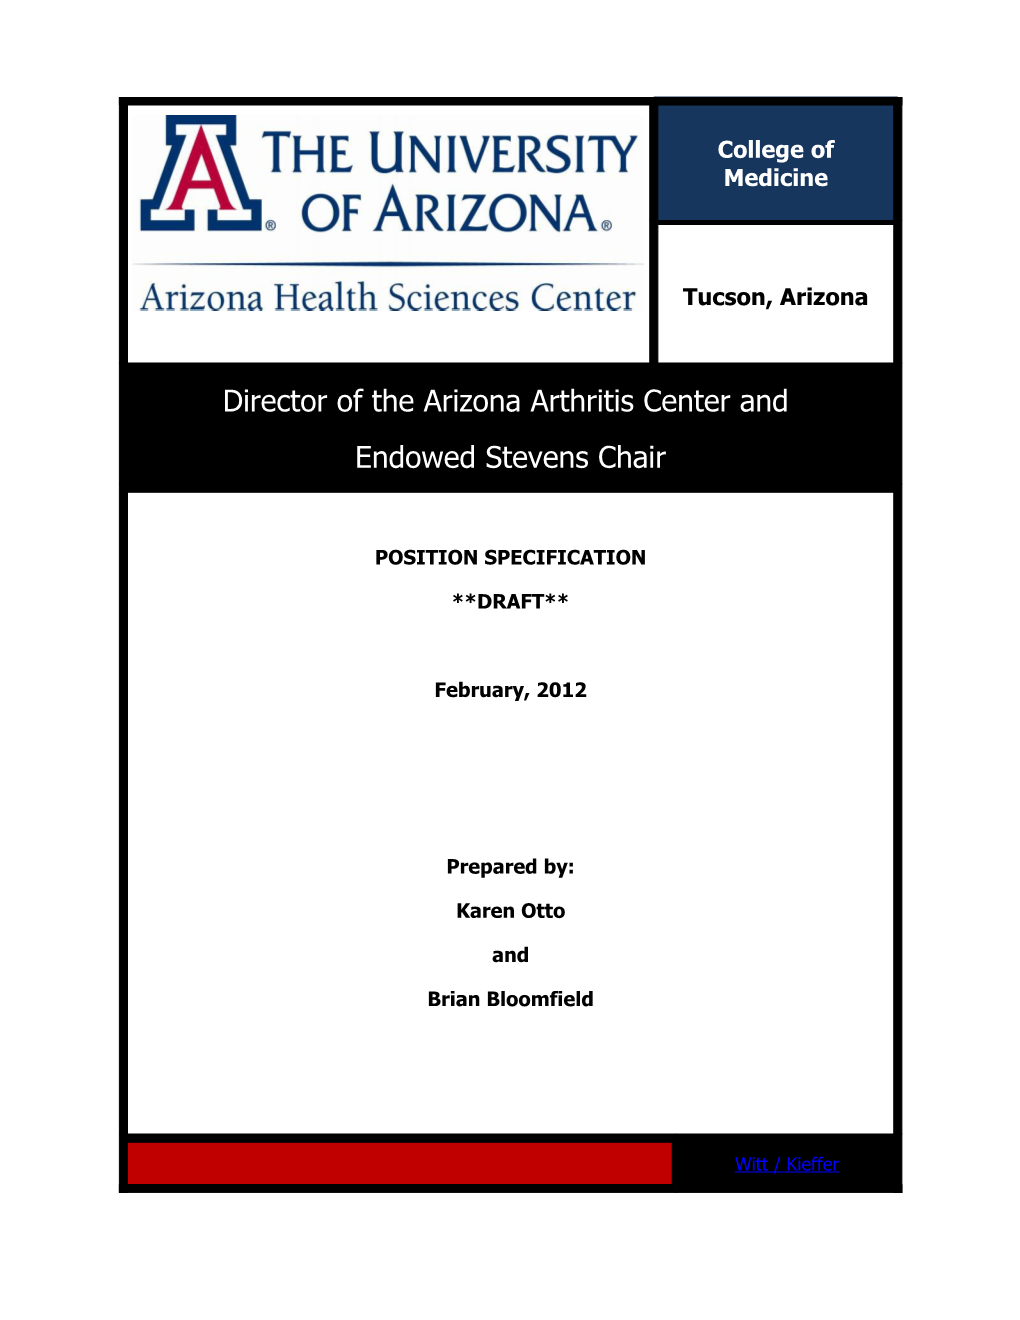 The Role of Director, Arizona Arthritis Center